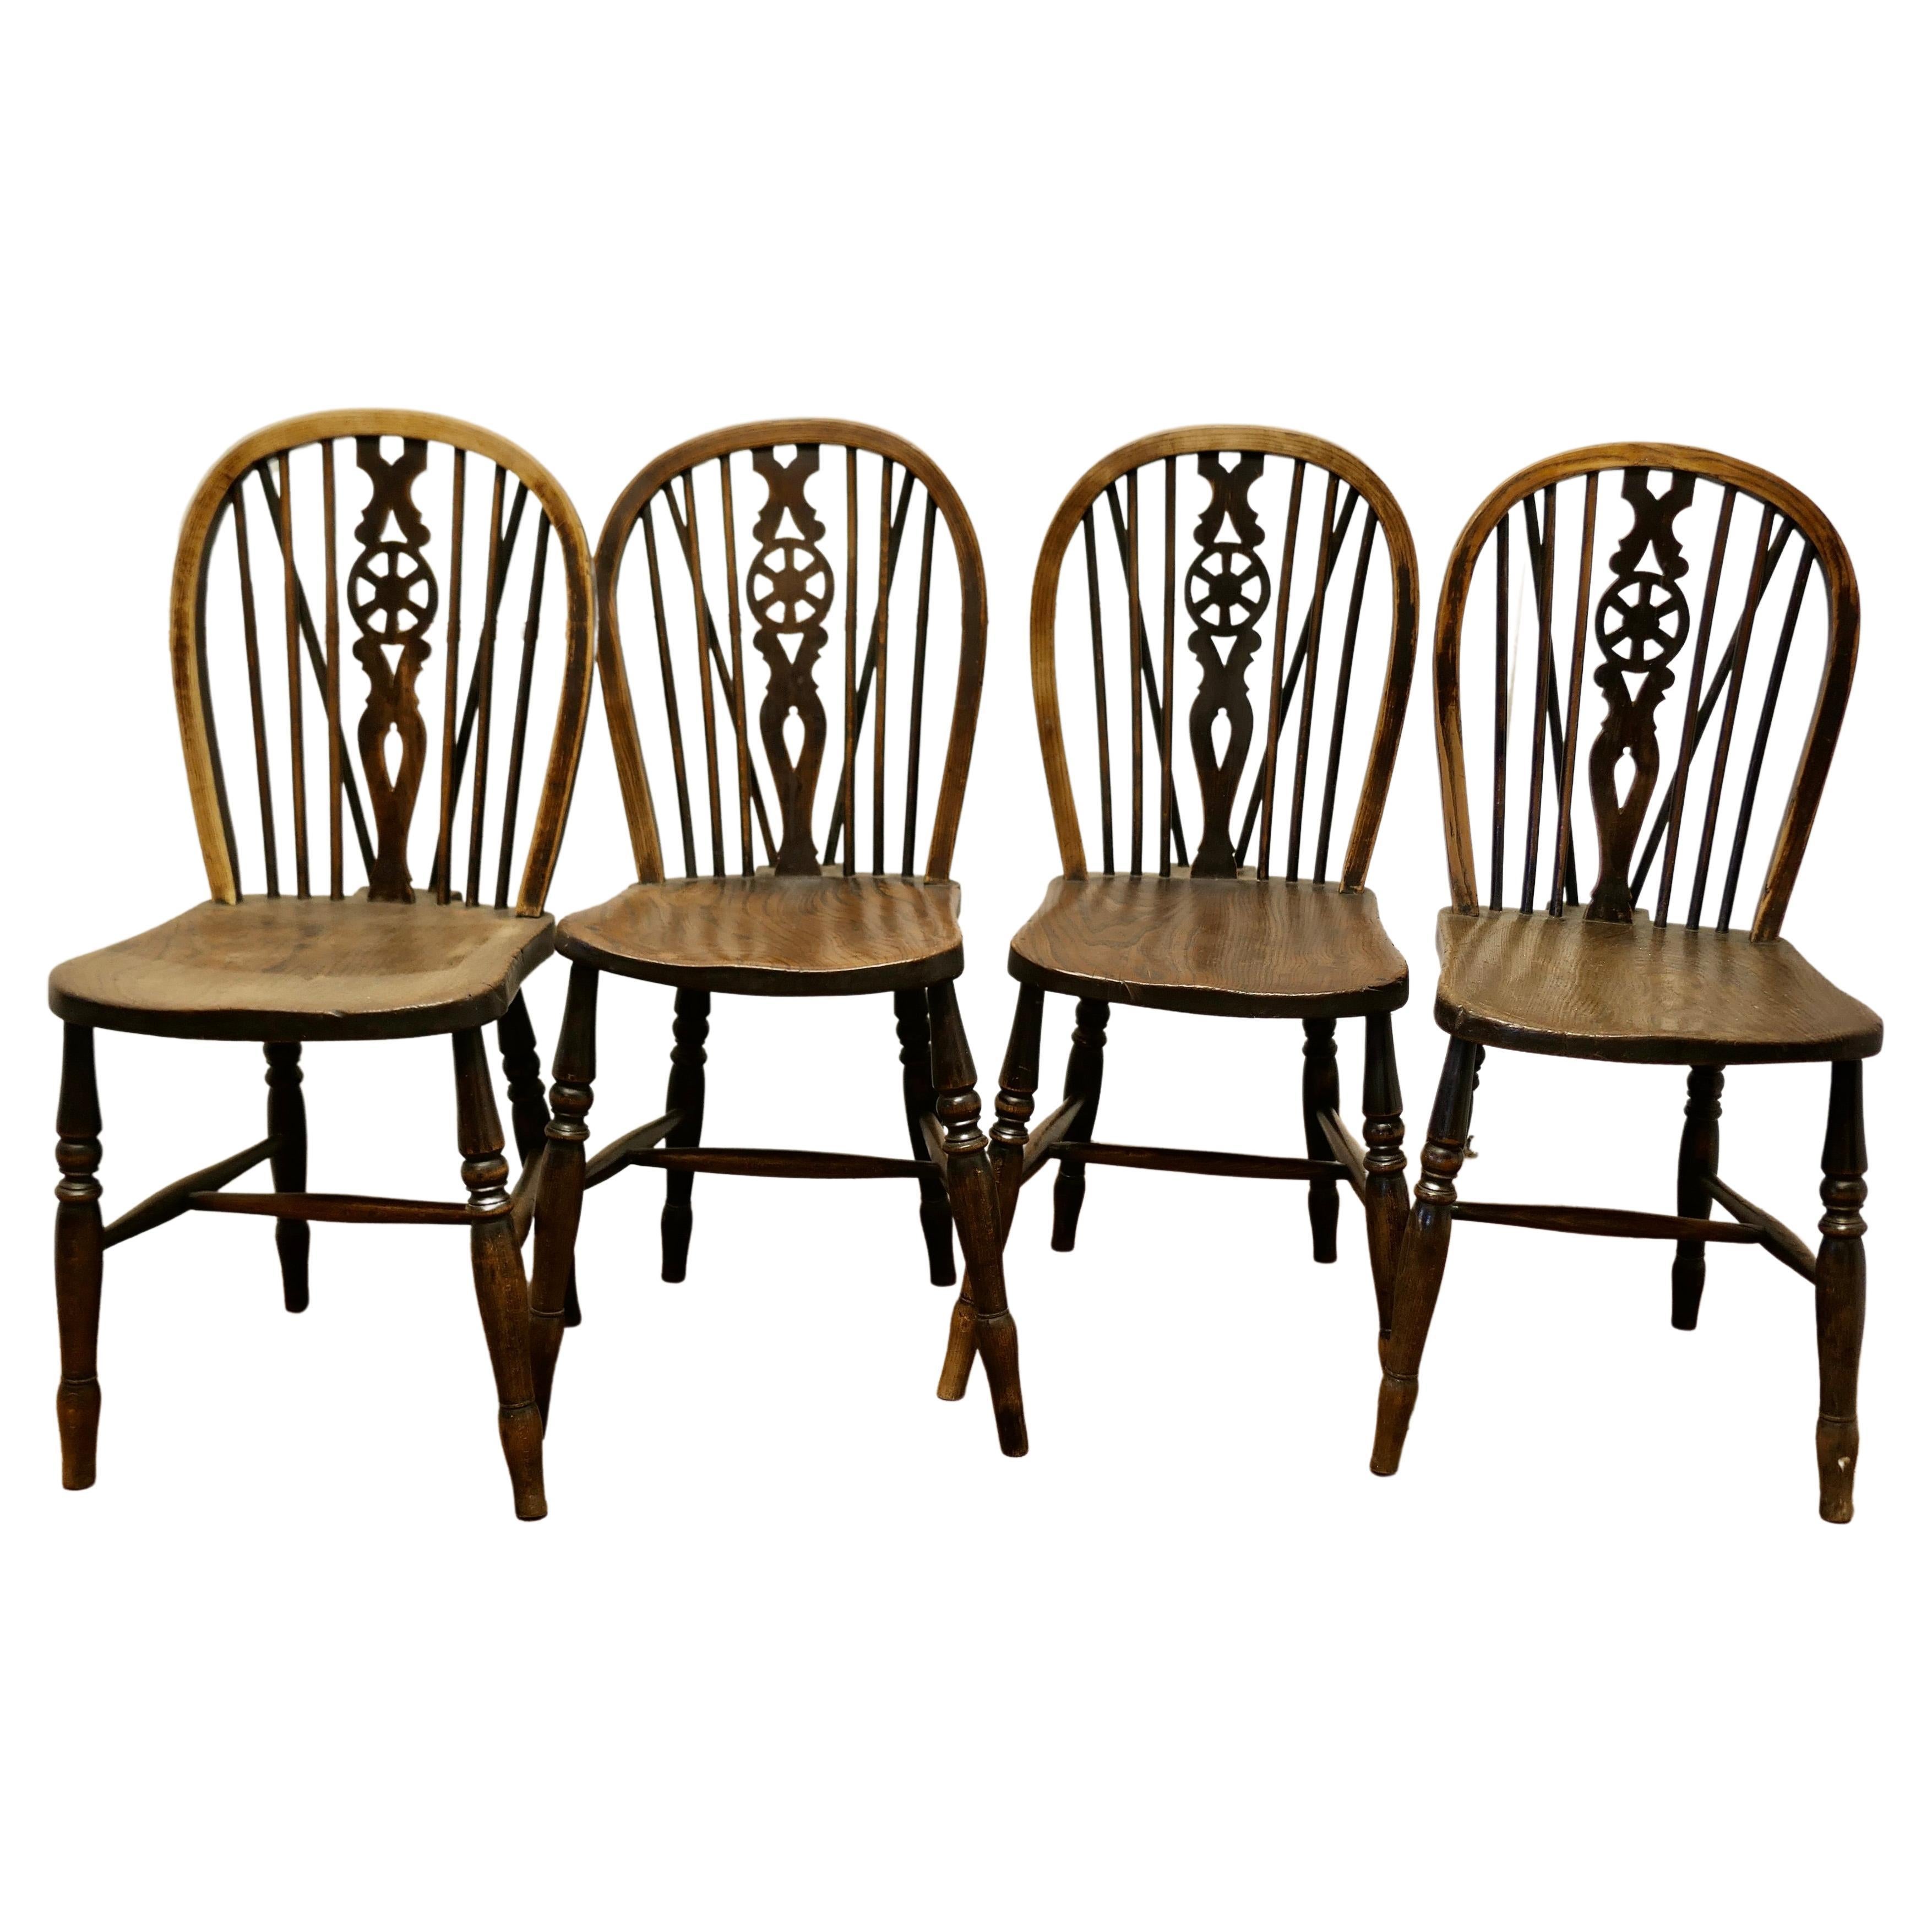 A Lovely Old Set of 4 Ash & Elm Wheel Back Windsor Kitchen Chairs   